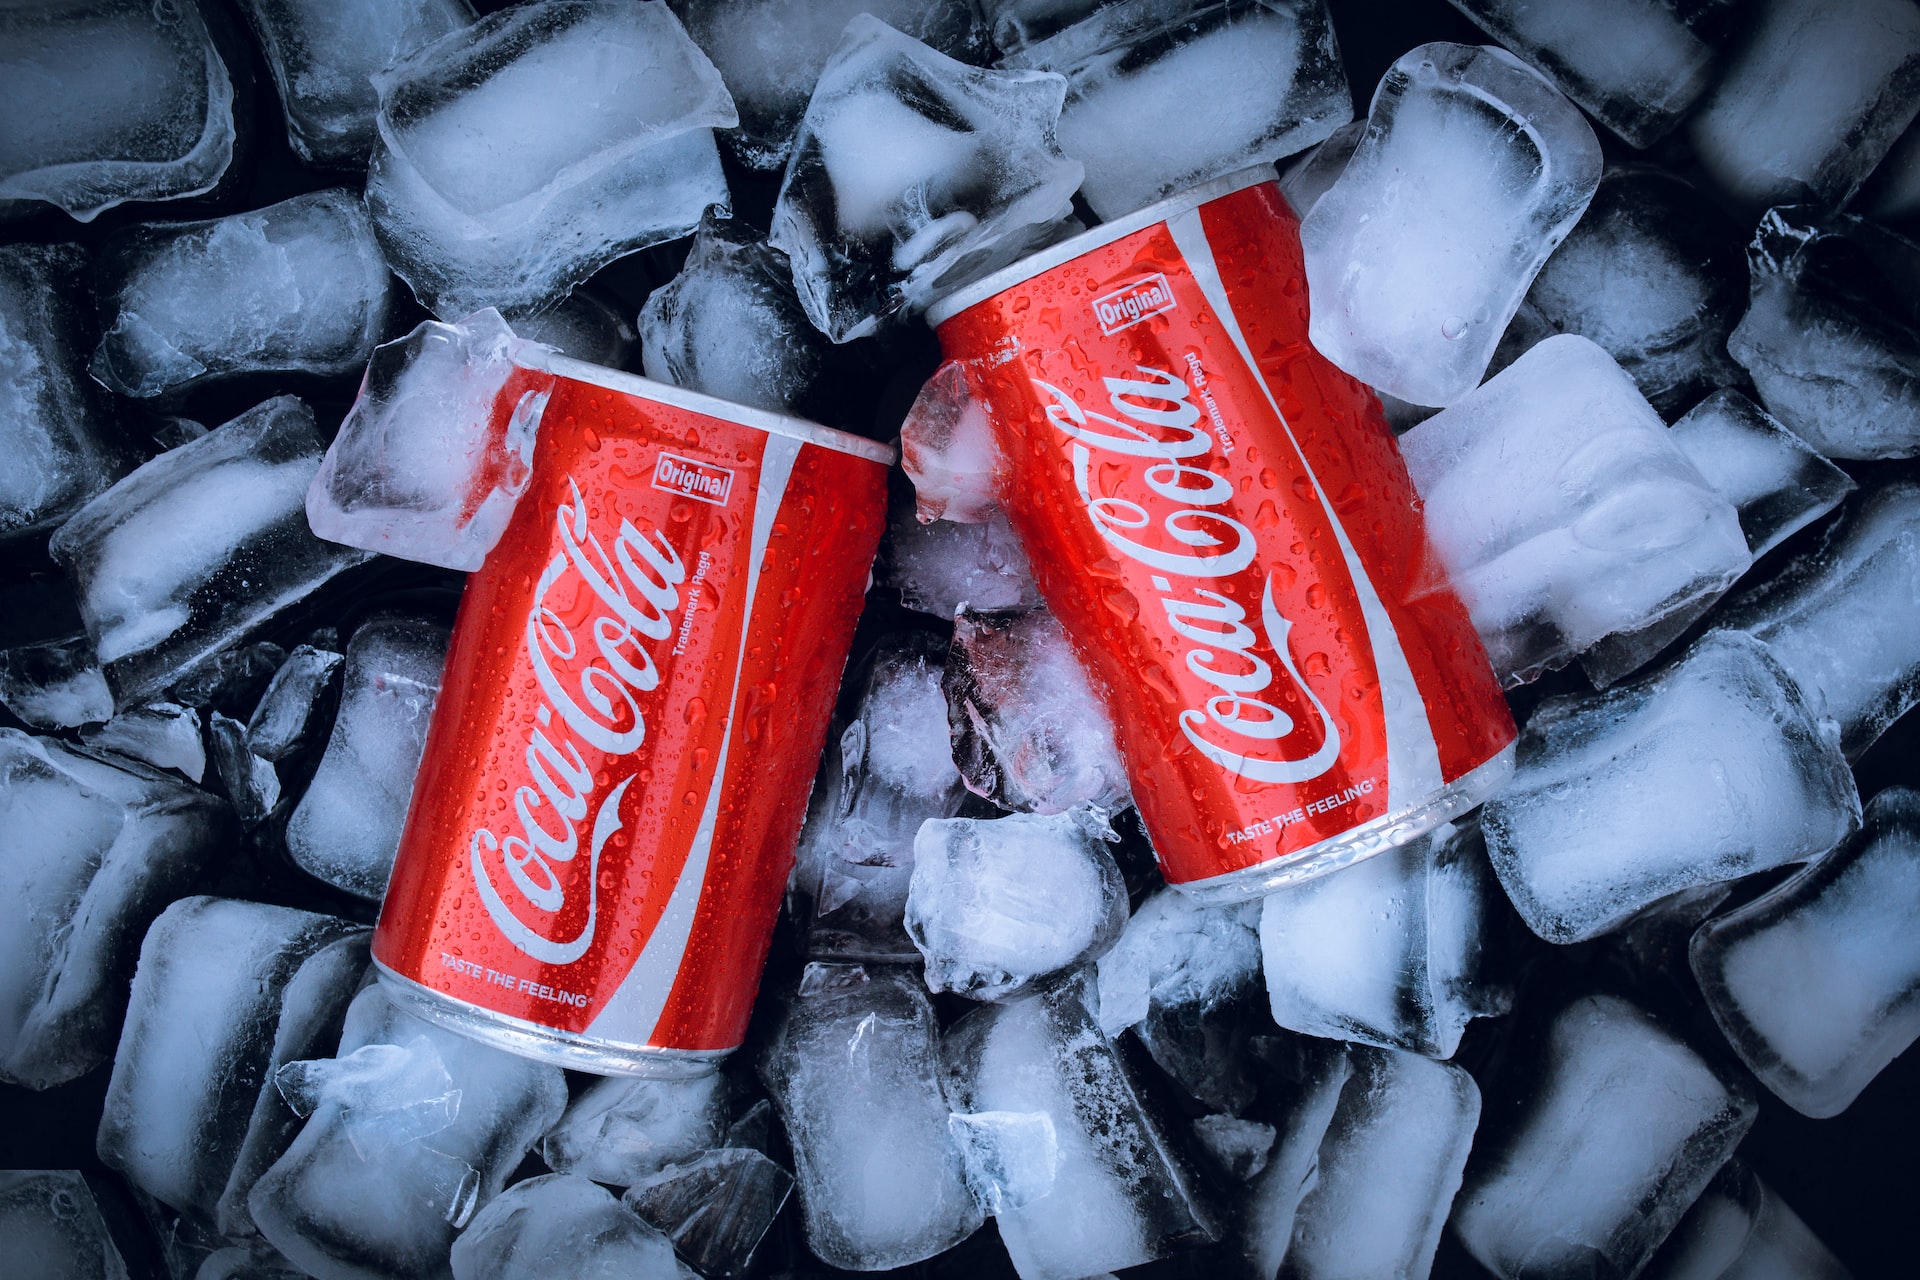 Coca-Cola © Unsplash